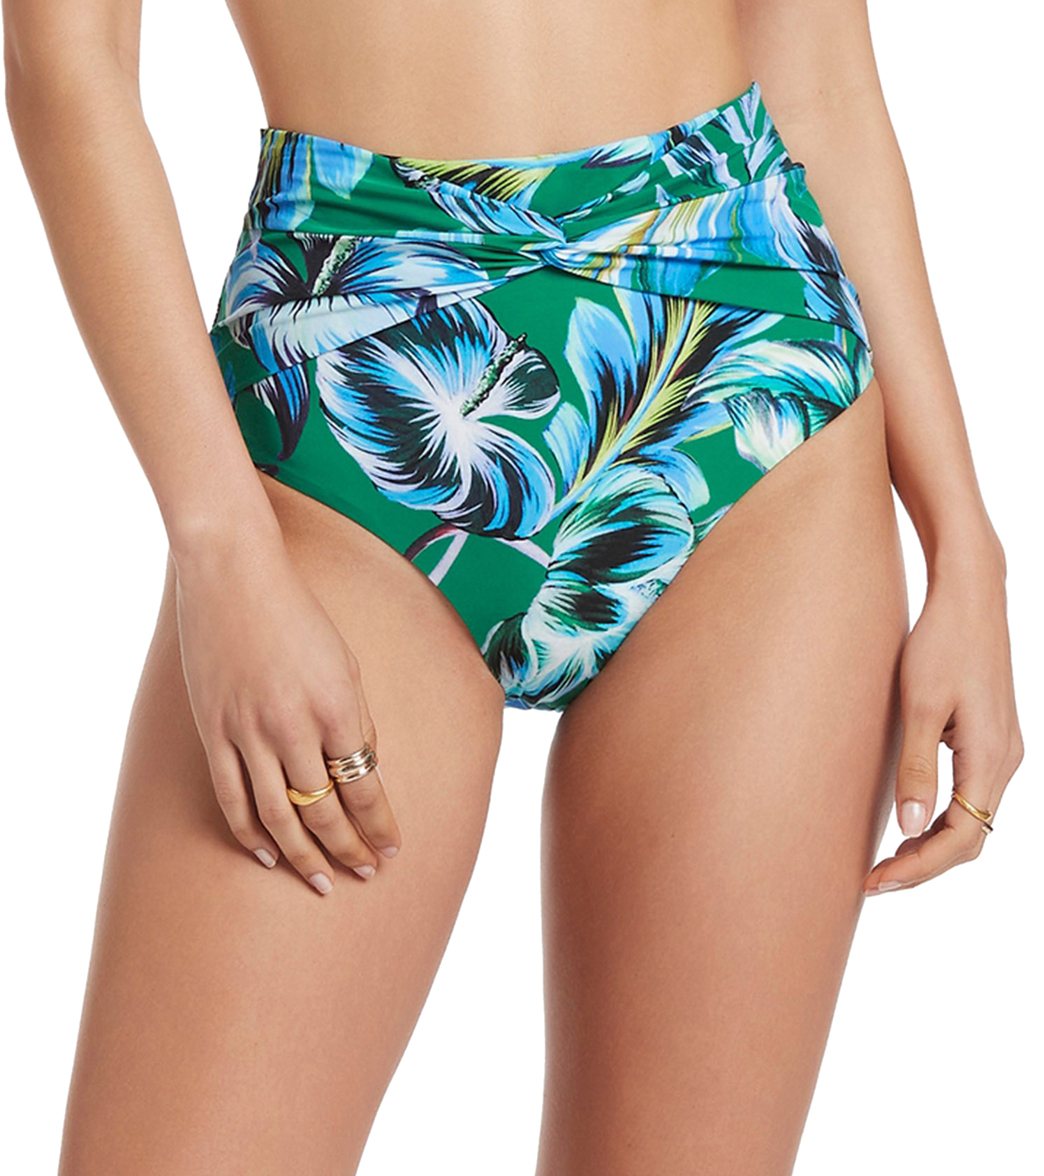 Jets Swimwear Australia Women's Viva Twist Front Bikini Bottom - Emerald 10 - Swimoutlet.com